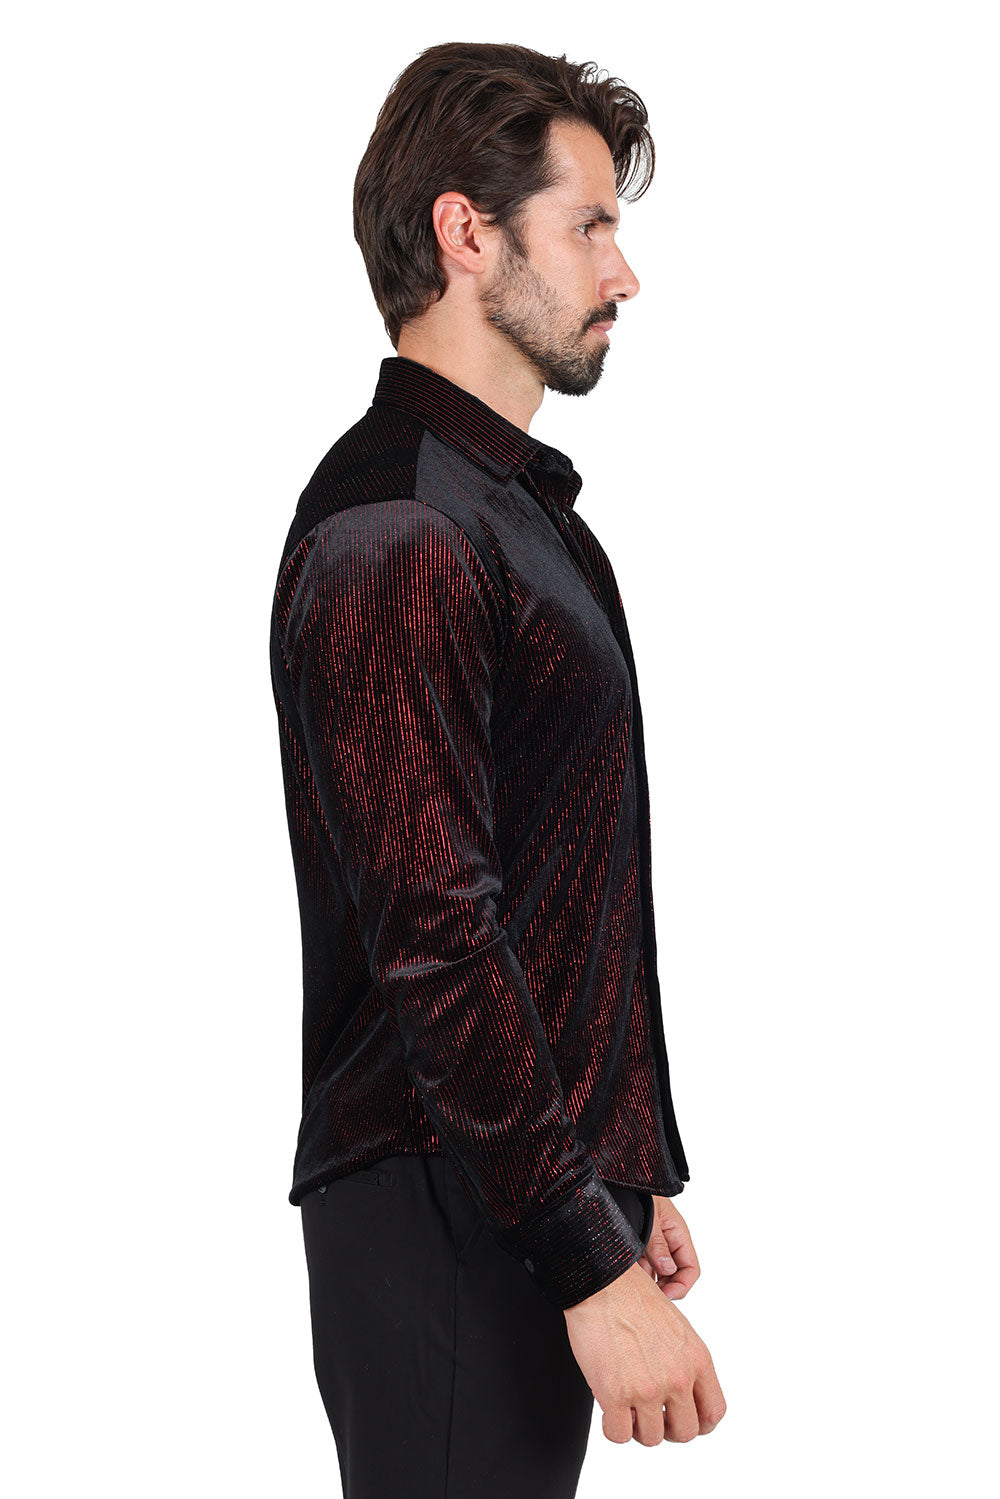 BARABAS Men's Shiny Metallic Print Design Long Sleeves Shirt 2SVL01 Black Red